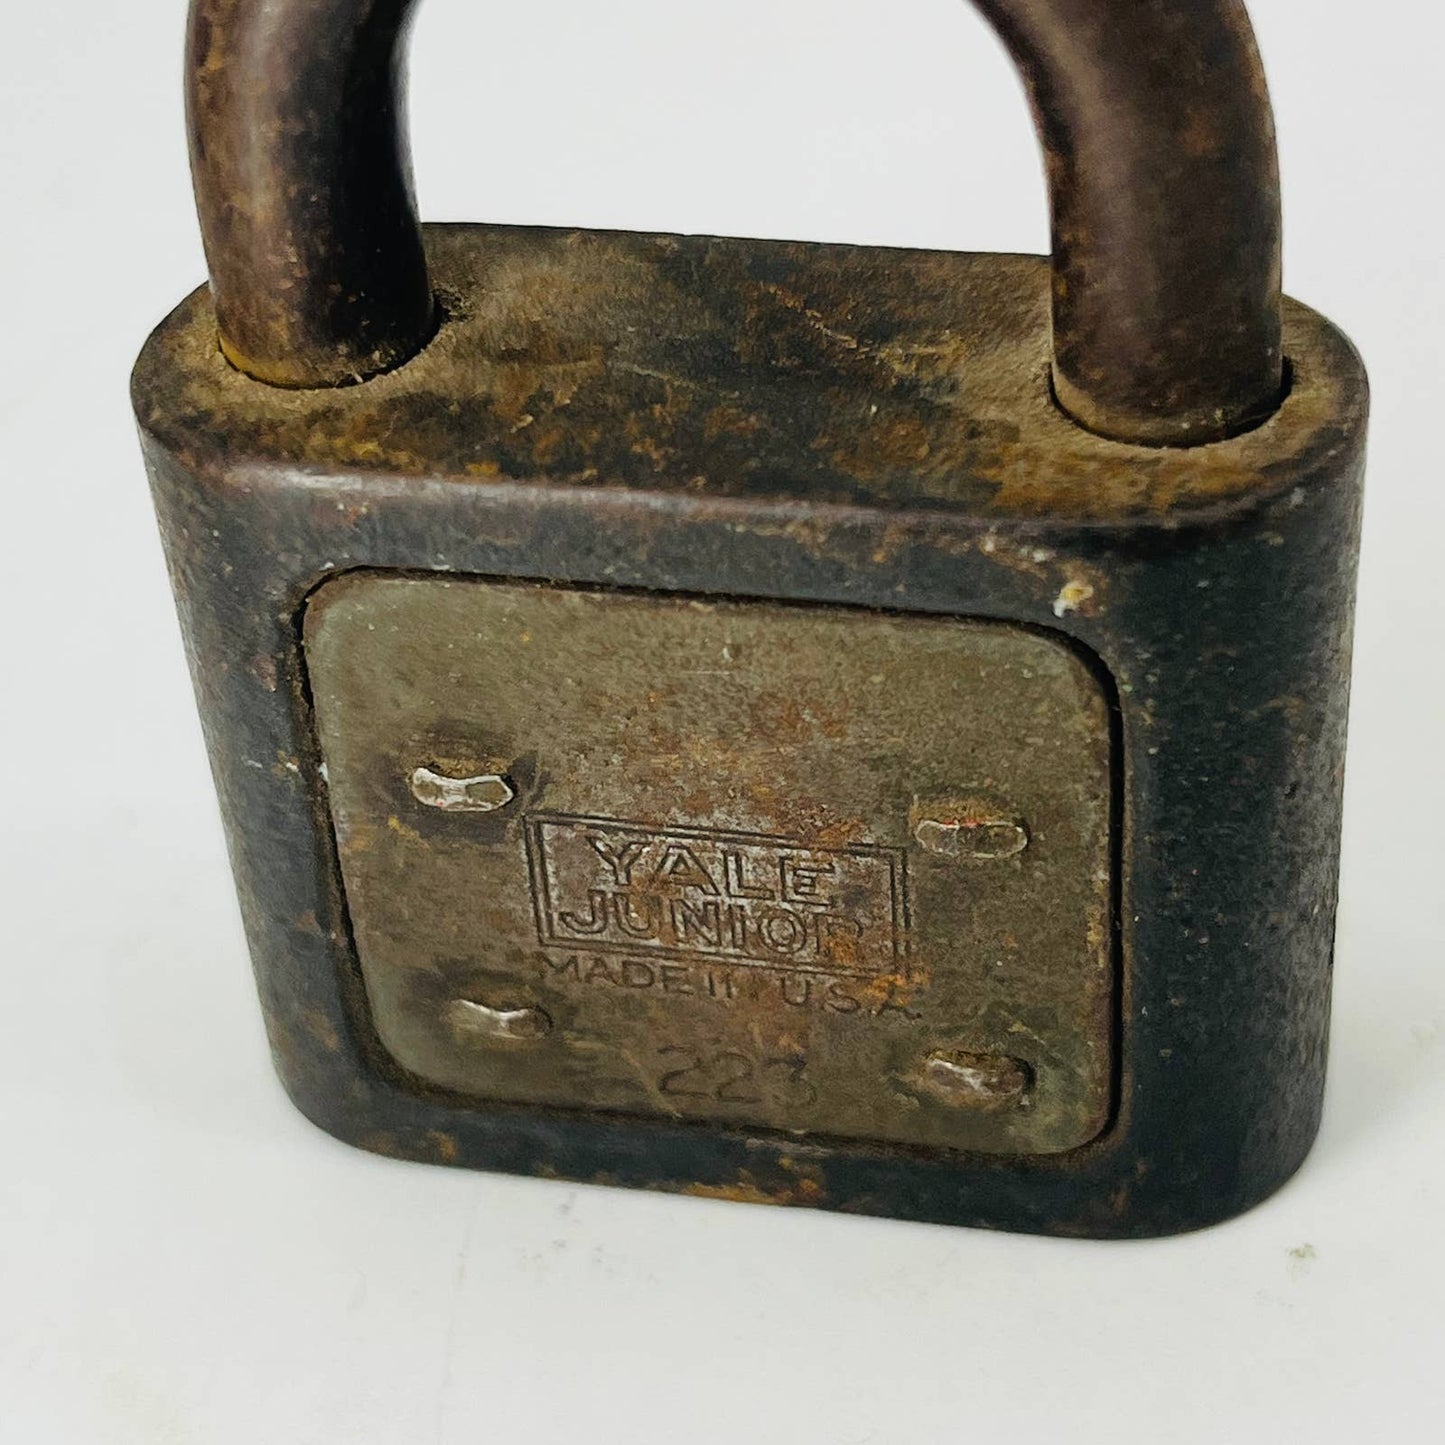 Vintage Art Deco Yale & Towne Yale Junior 223 5 Lock Padlock No Key SA8-4